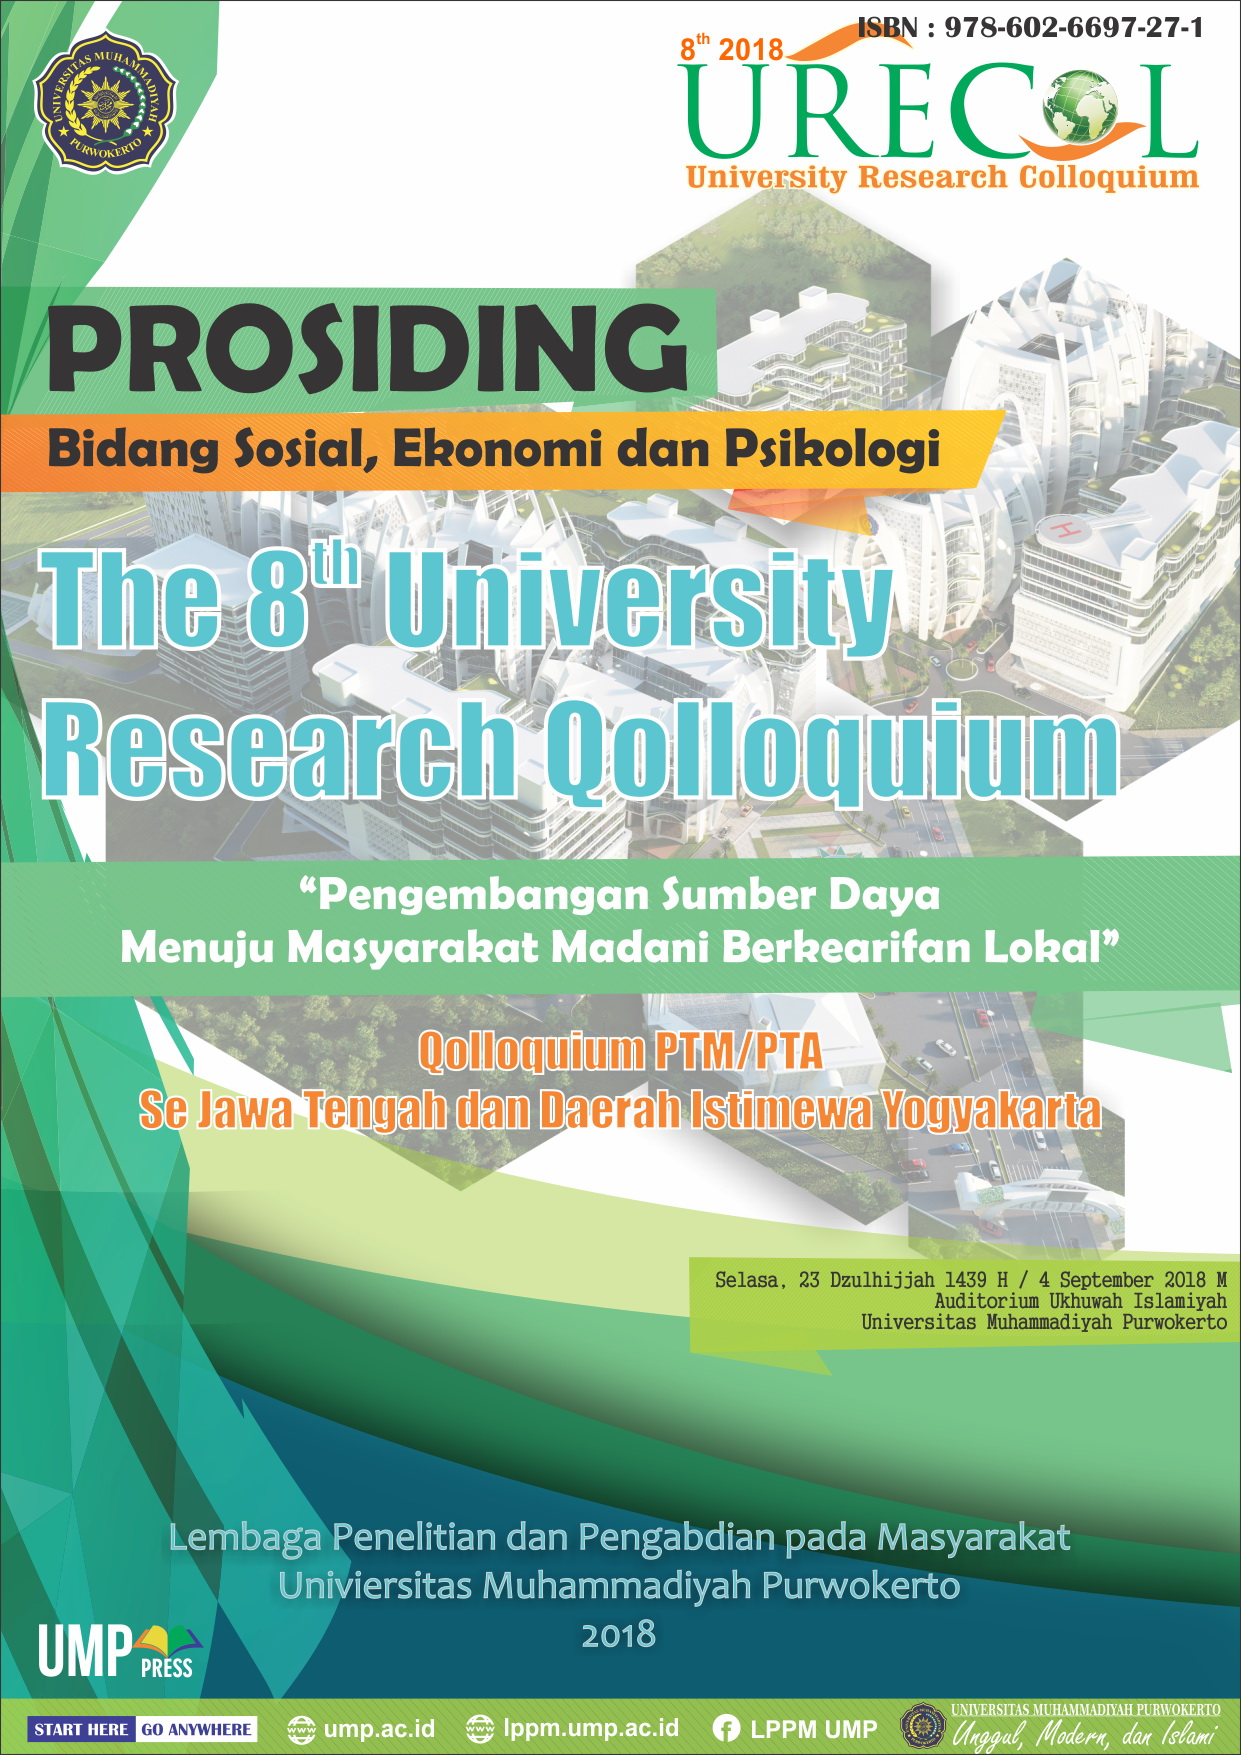 					View Proceeding of The 8th University Research Colloquium 2018: Bidang Sosial Ekonomi dan Psikologi
				